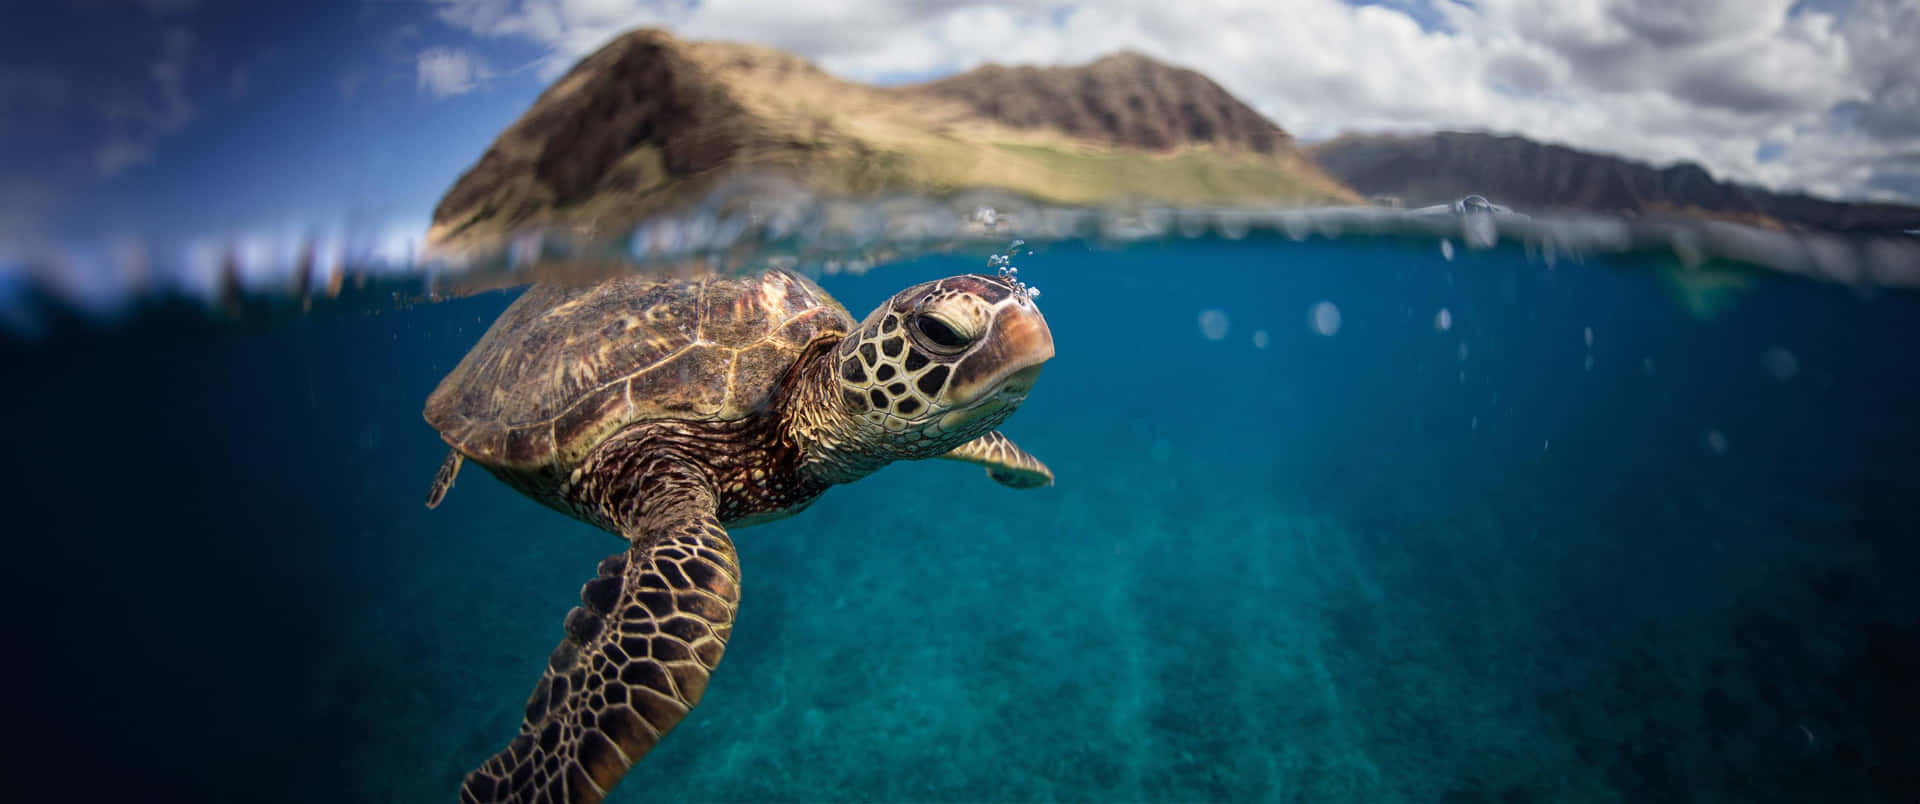 Green Sea Turtle Underwater Adventure Wallpaper